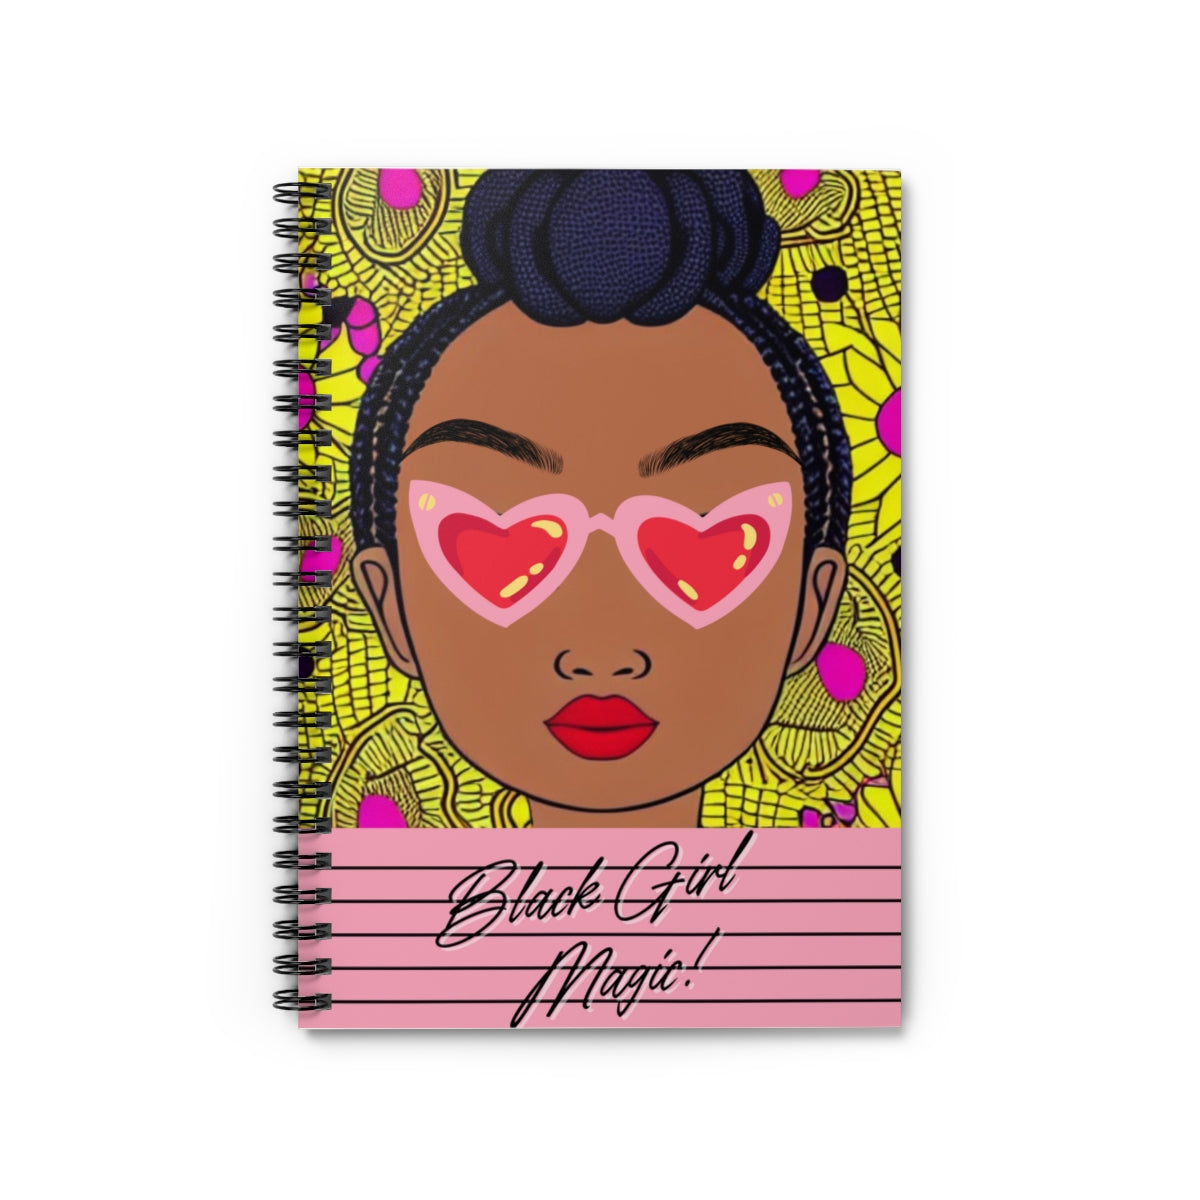 Black Girl Magic Spiral Notebook - Ruled Line